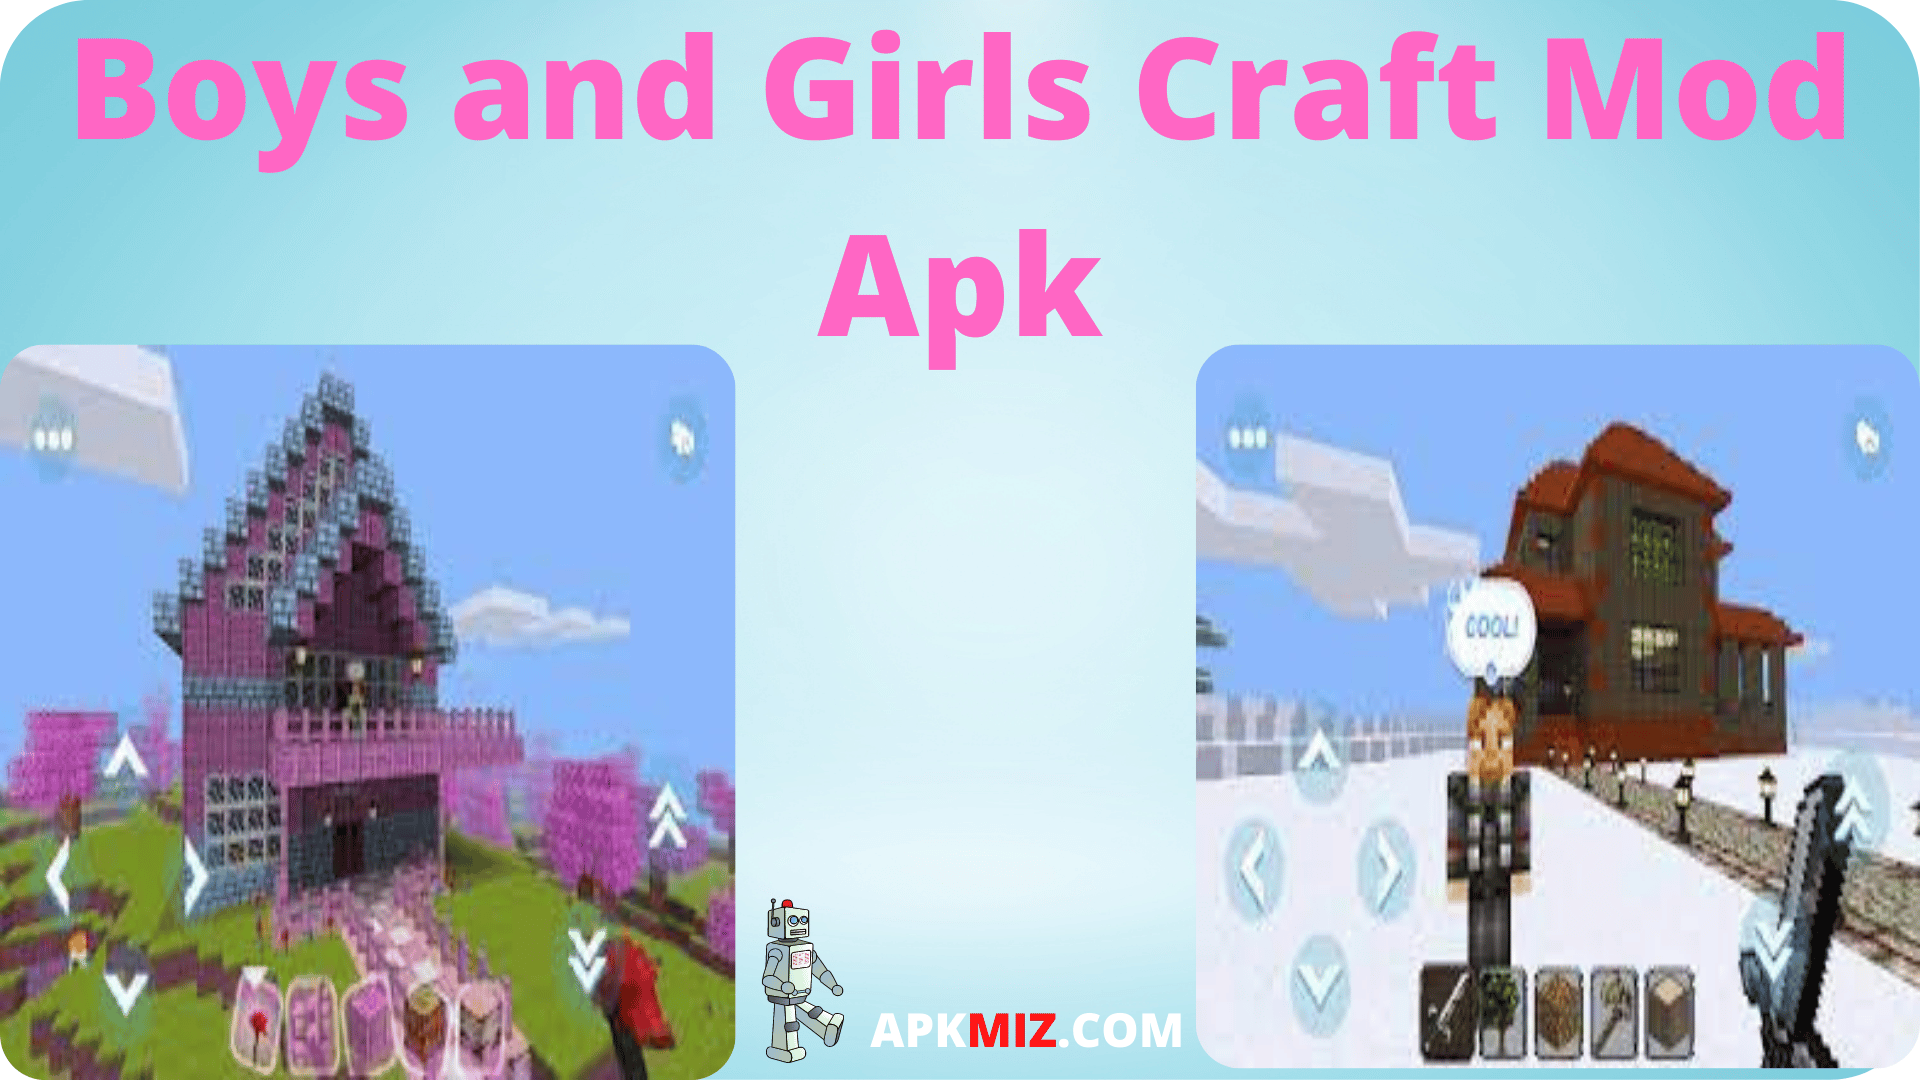 Boys and Girls Craft Mod Apk